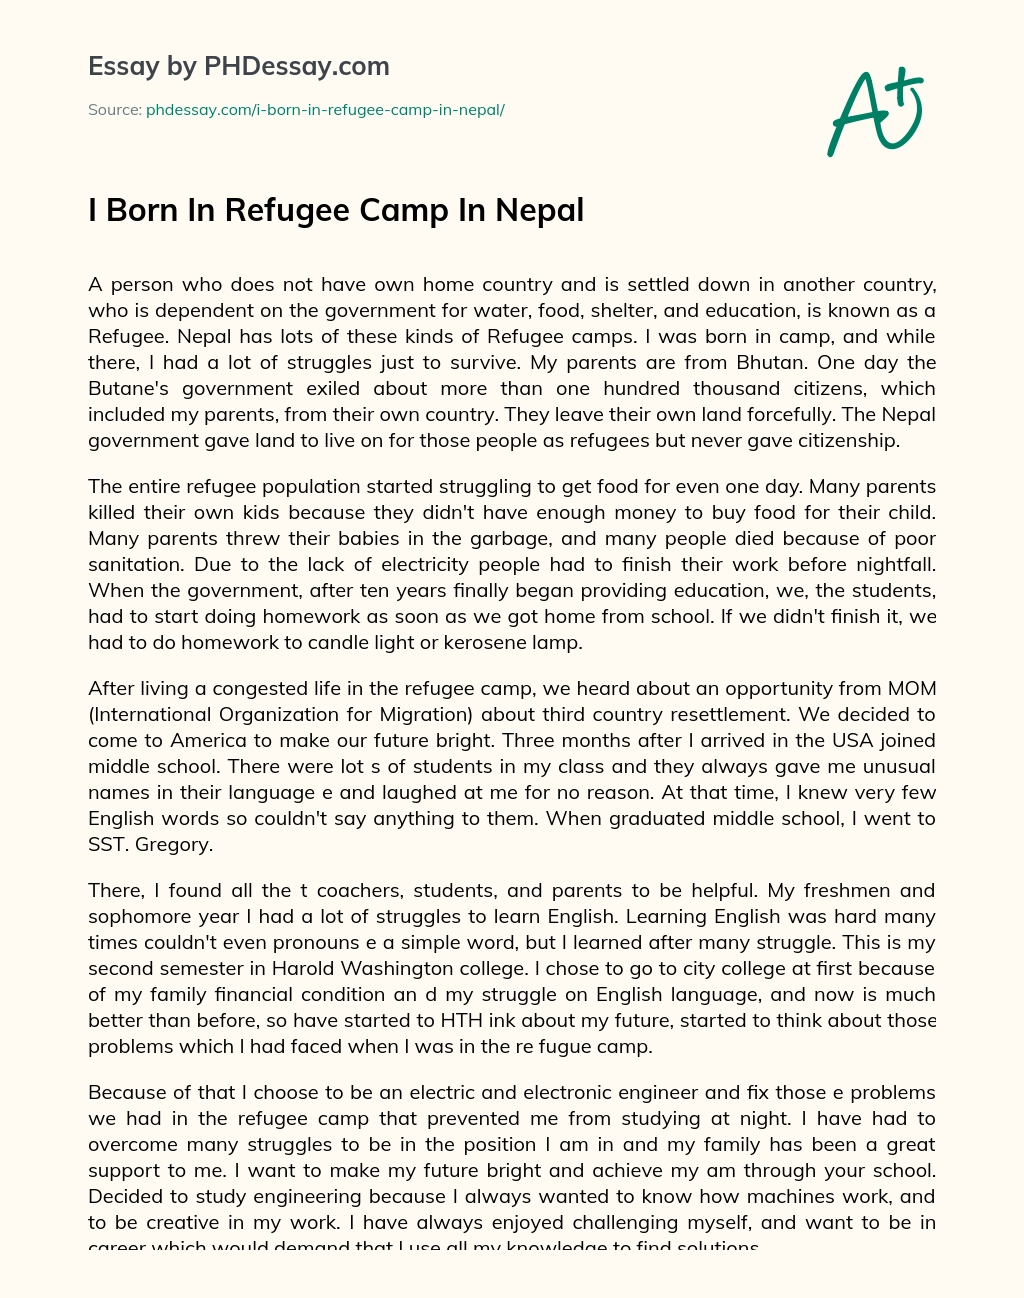 I Born In Refugee Camp In Nepal essay